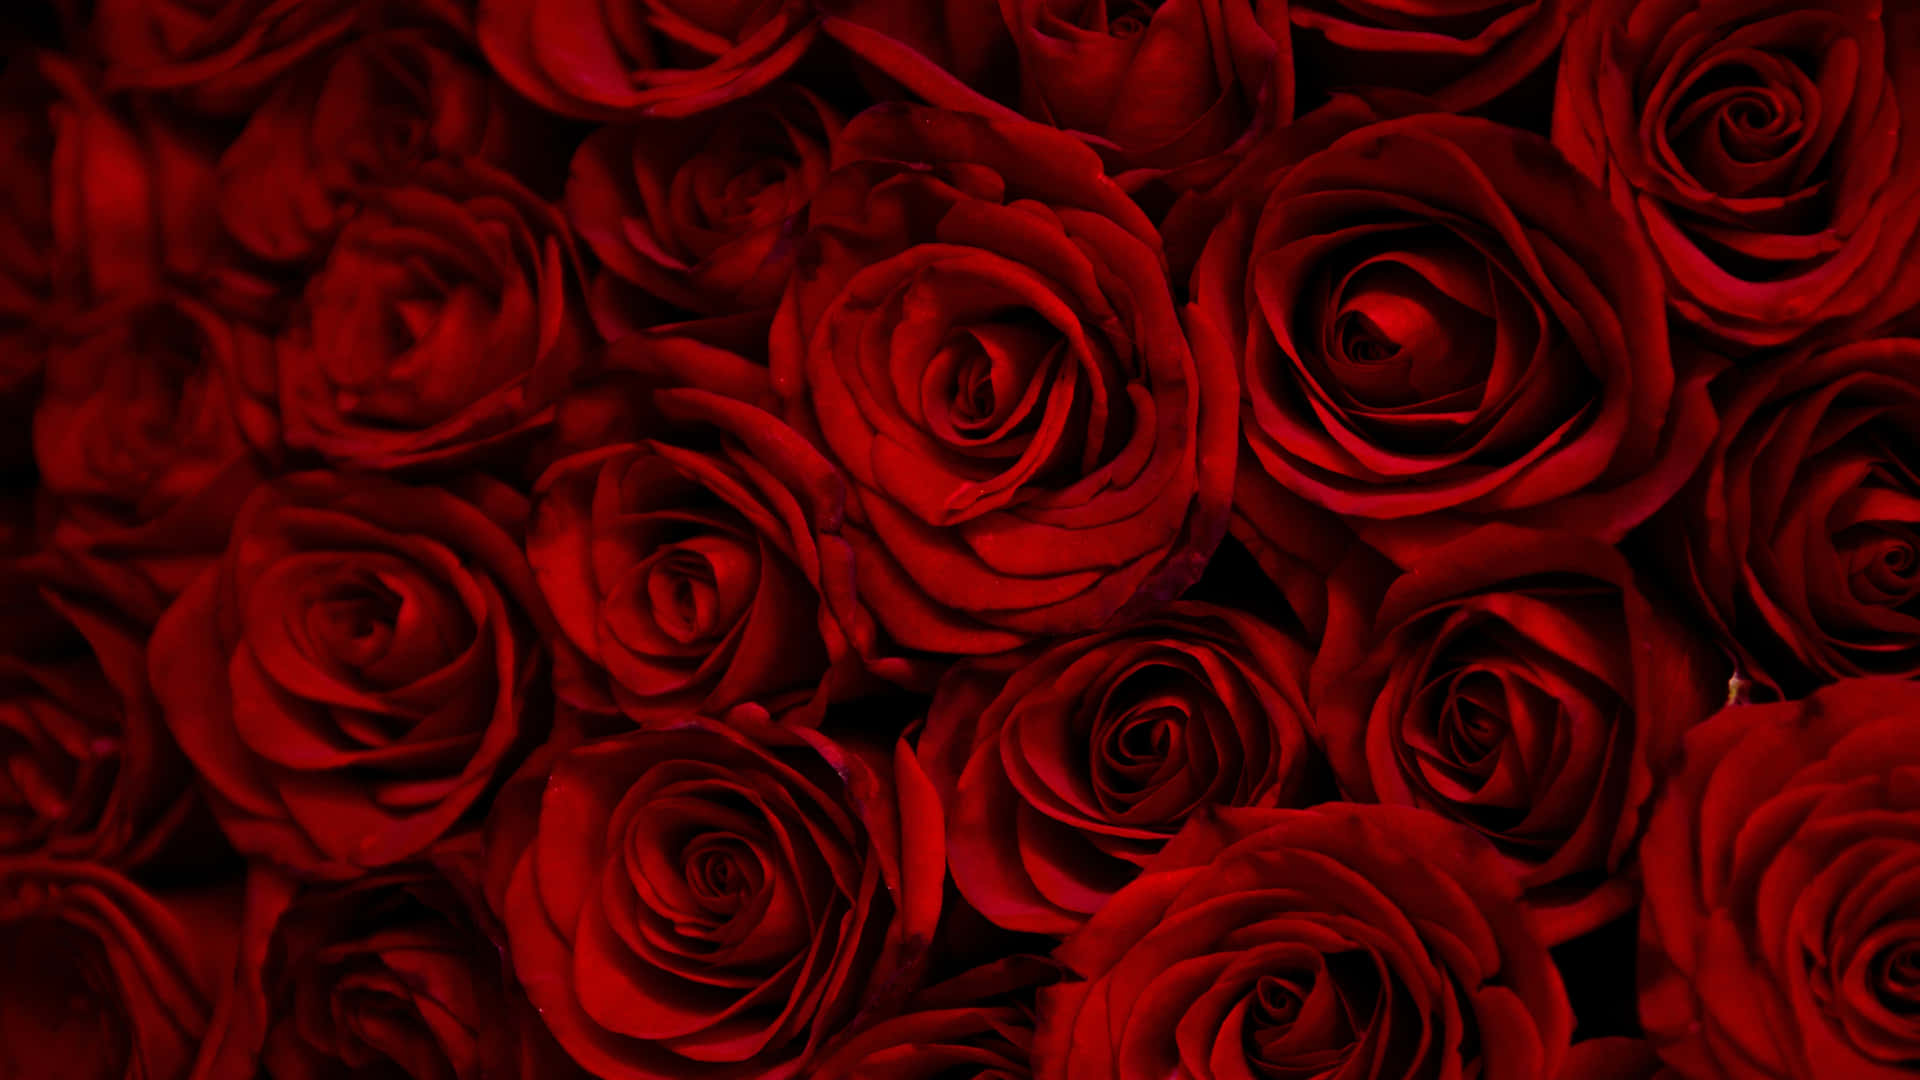 1440ptop View Shot Deep Red Roses Bakgrundsbild.